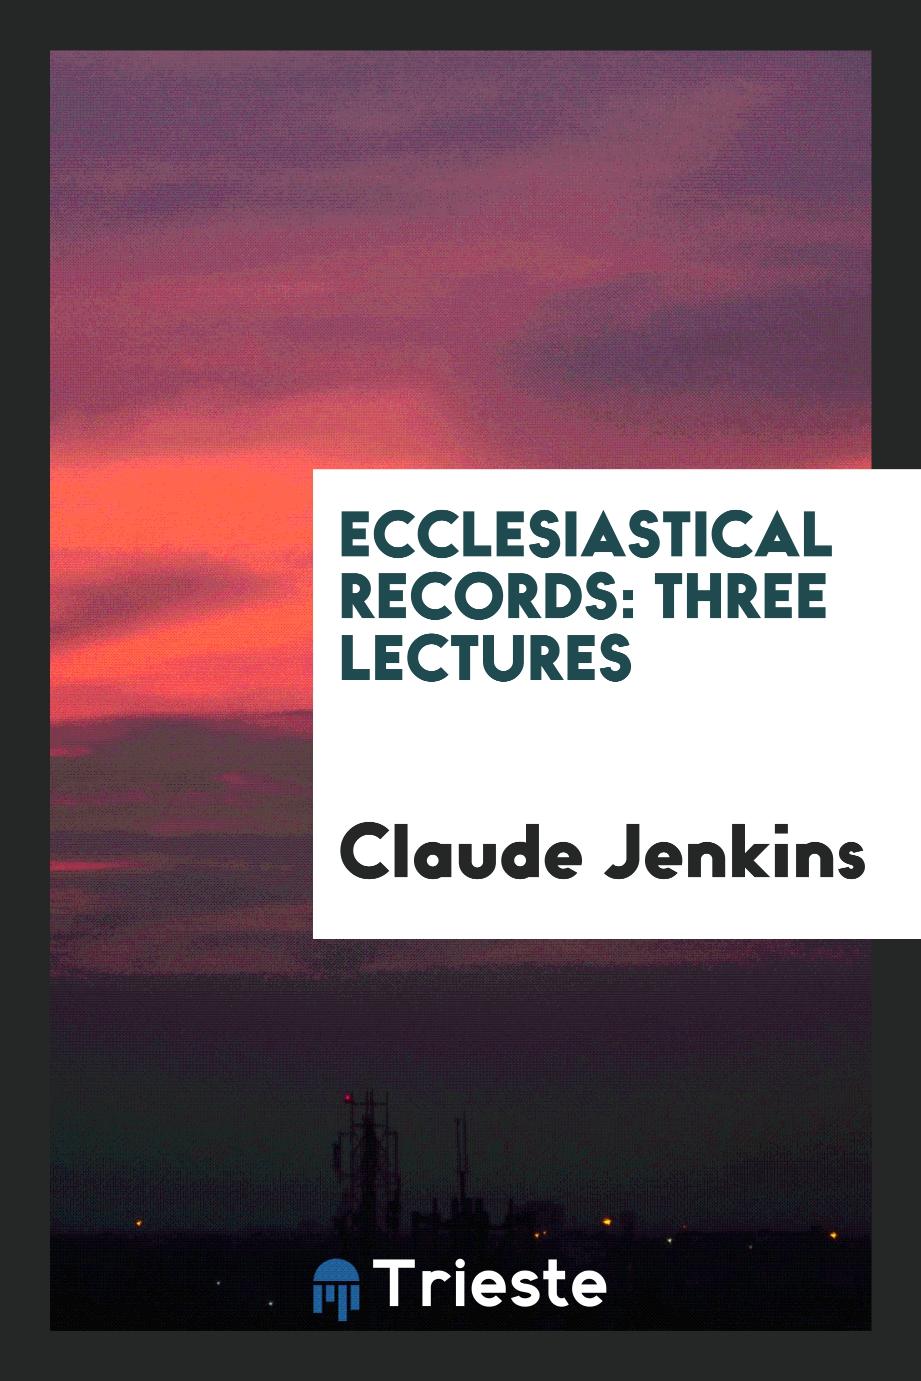 Ecclesiastical records: three lectures